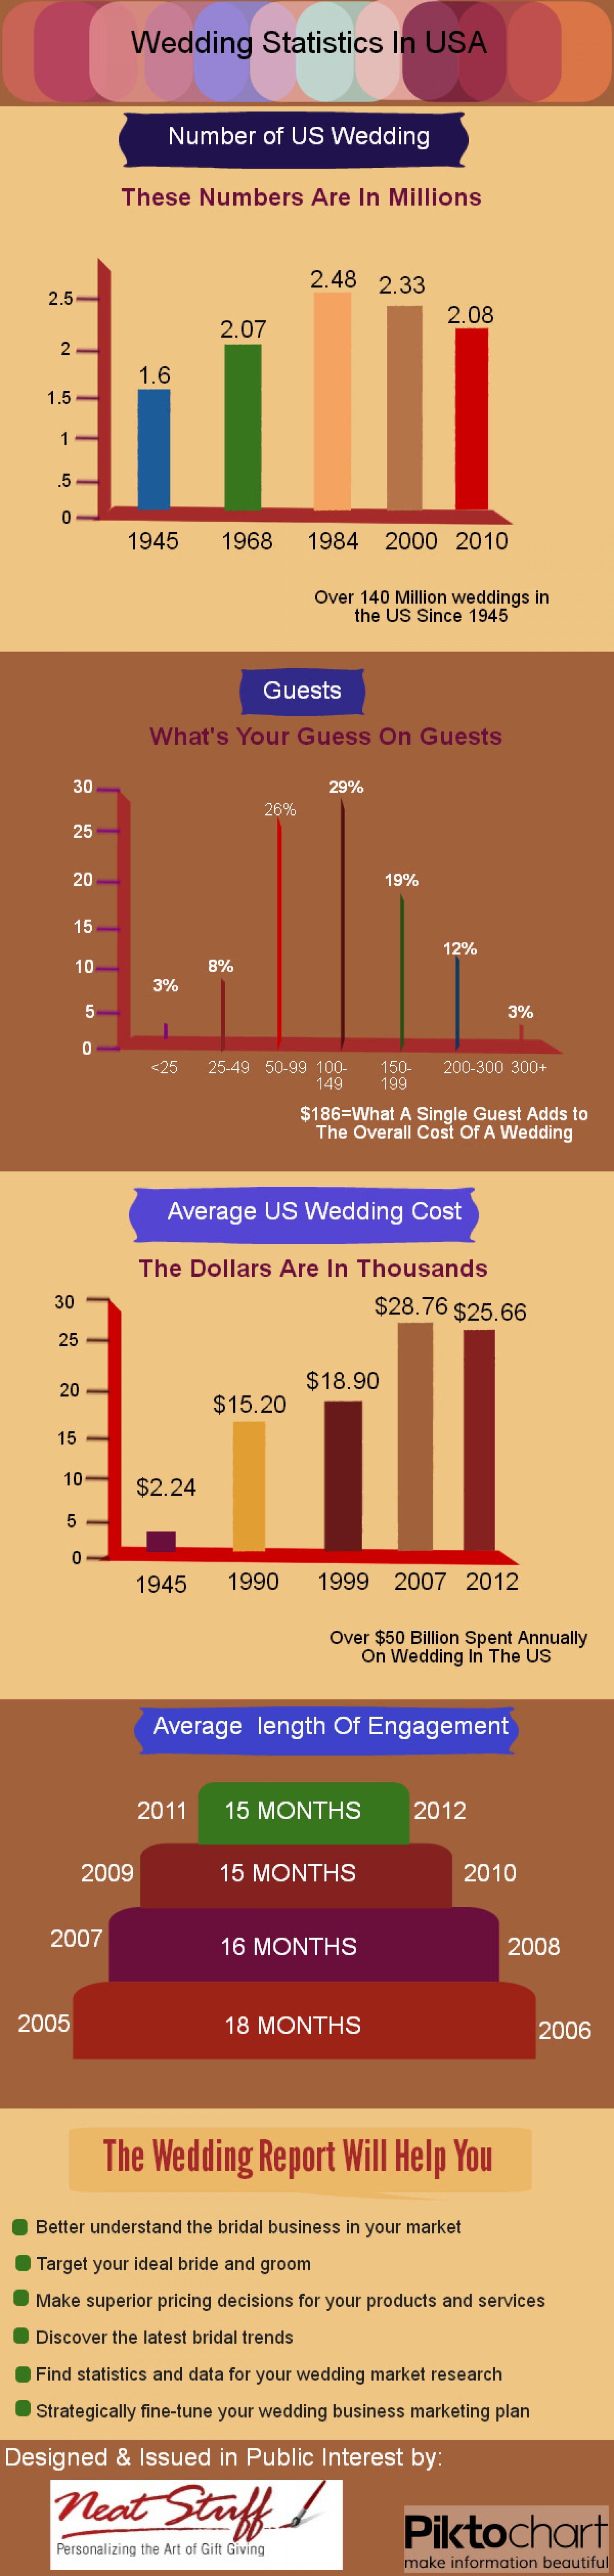 Wedding statistics in USA